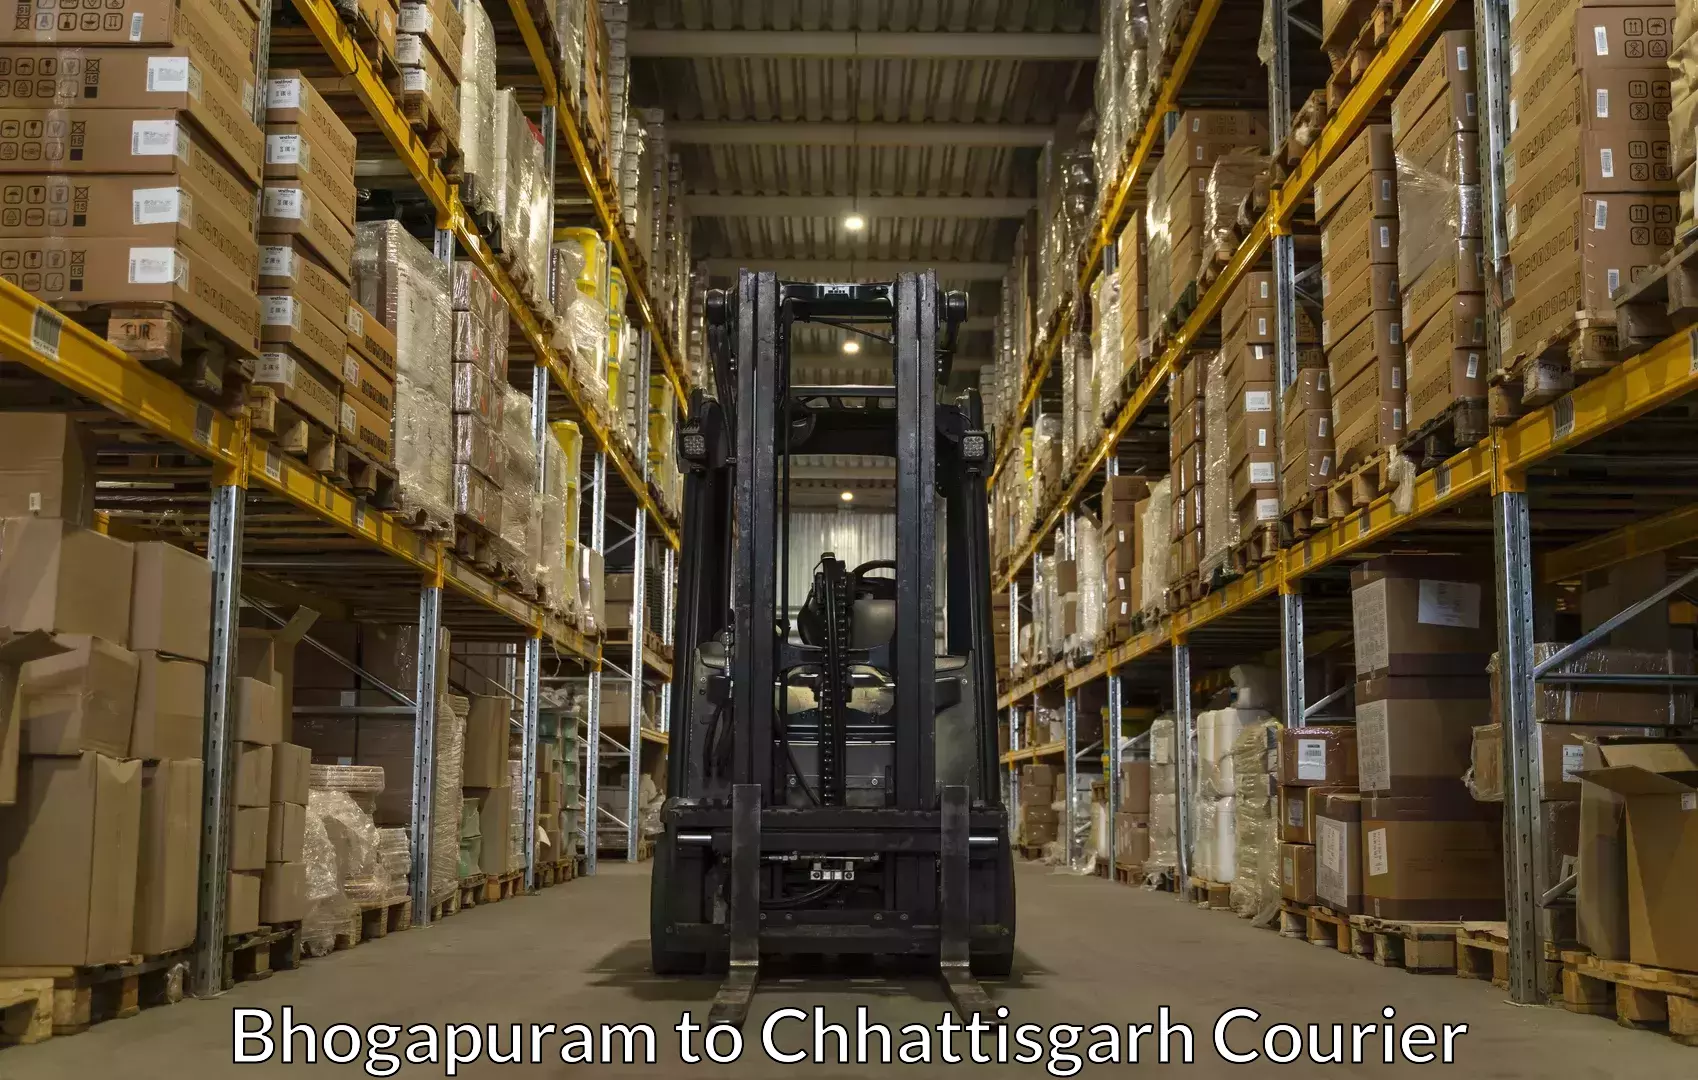 Quality relocation assistance Bhogapuram to Bijapur Chhattisgarh